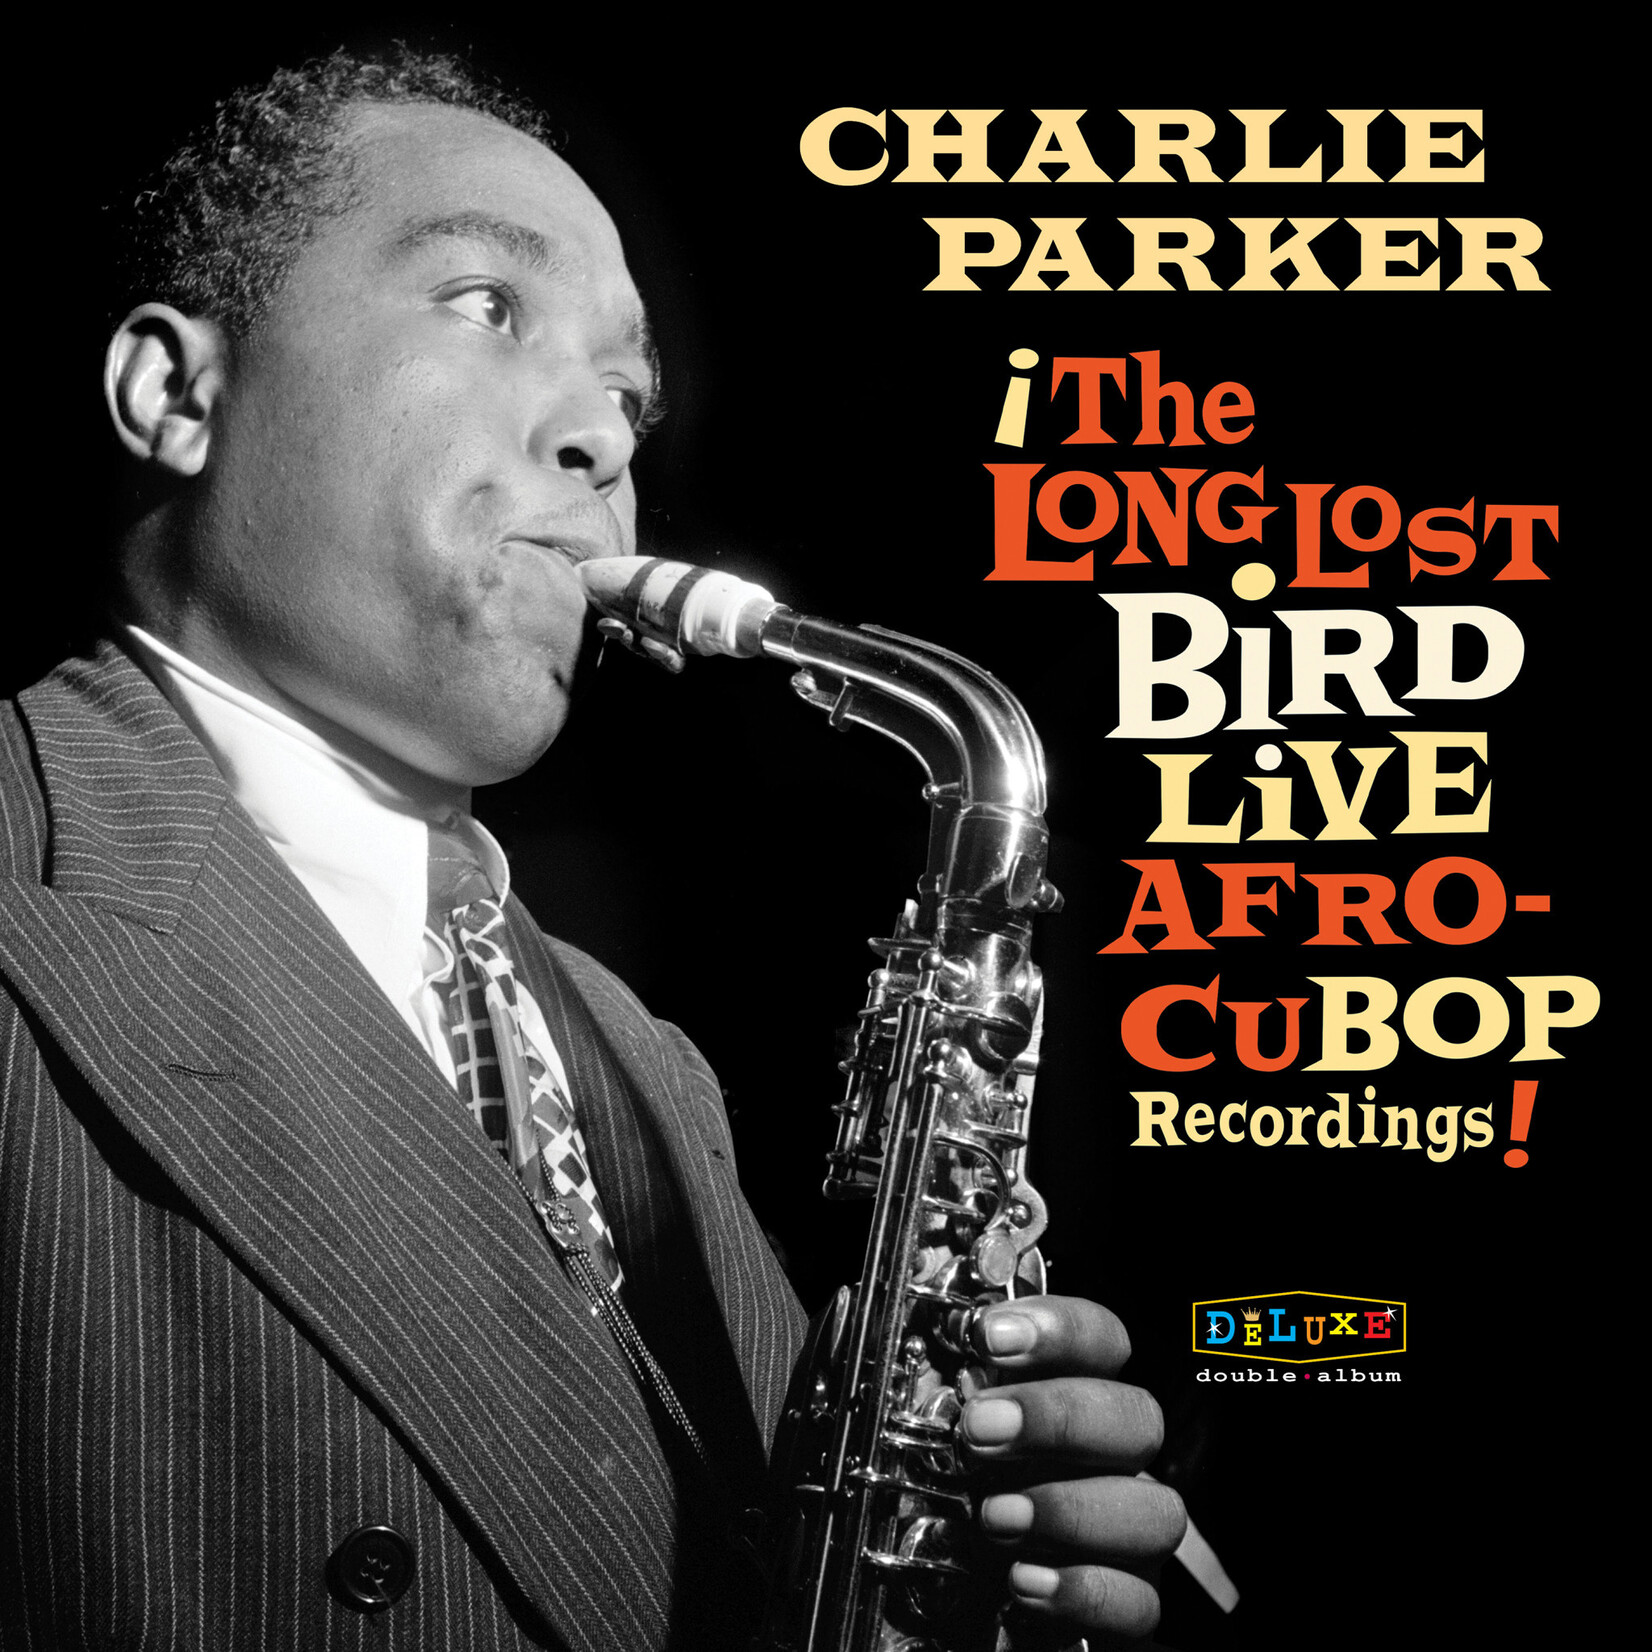 Charlie Parker - The Long Lost Bird Live  Afro-Cubop Recordings [2LP] (RSD2023)